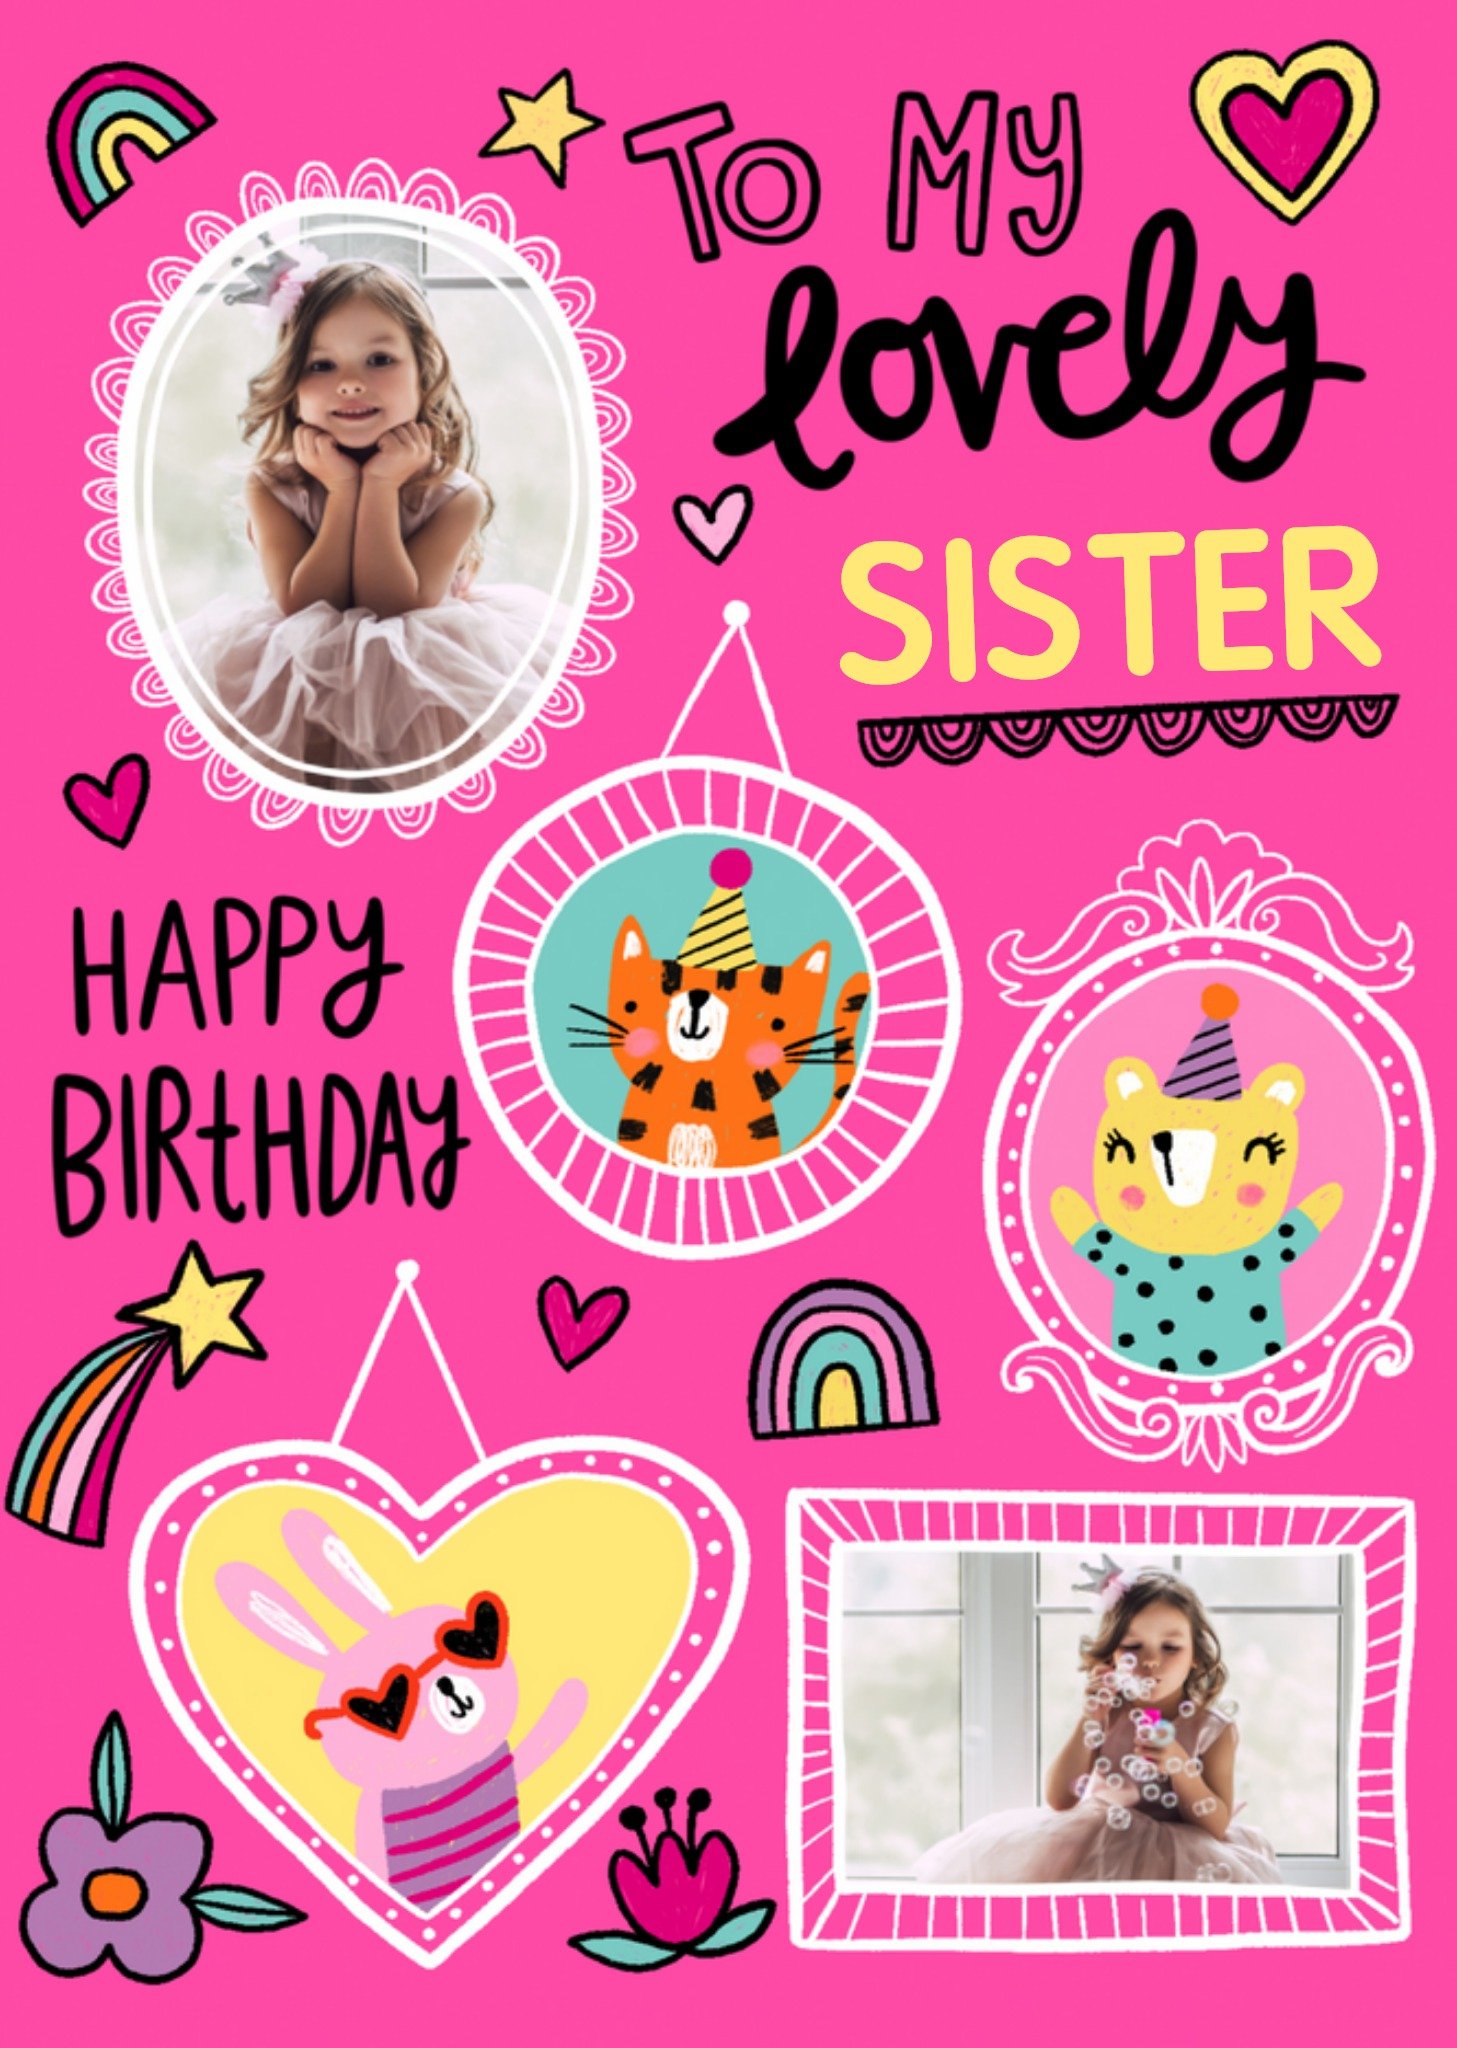 Verjaardagskaart - Lovely sister